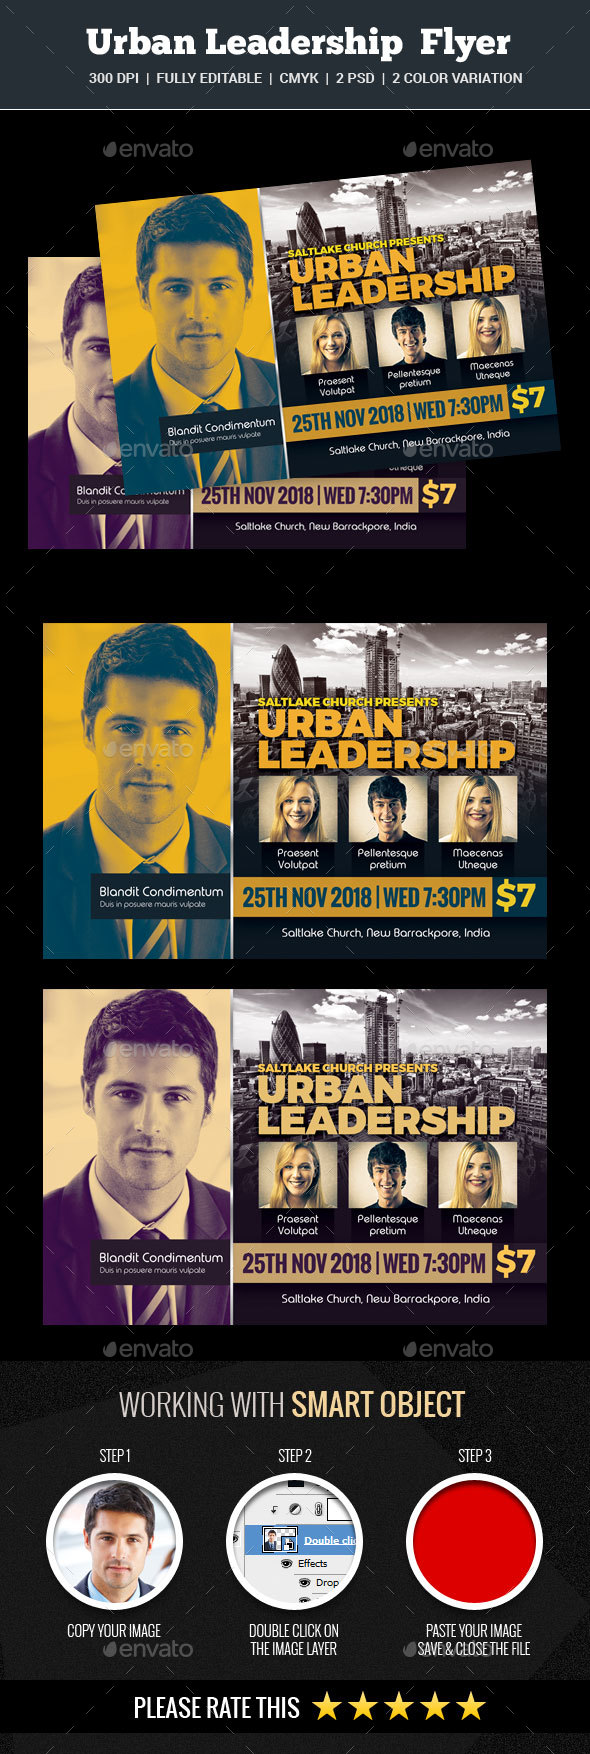 Urban Leadership Flyer